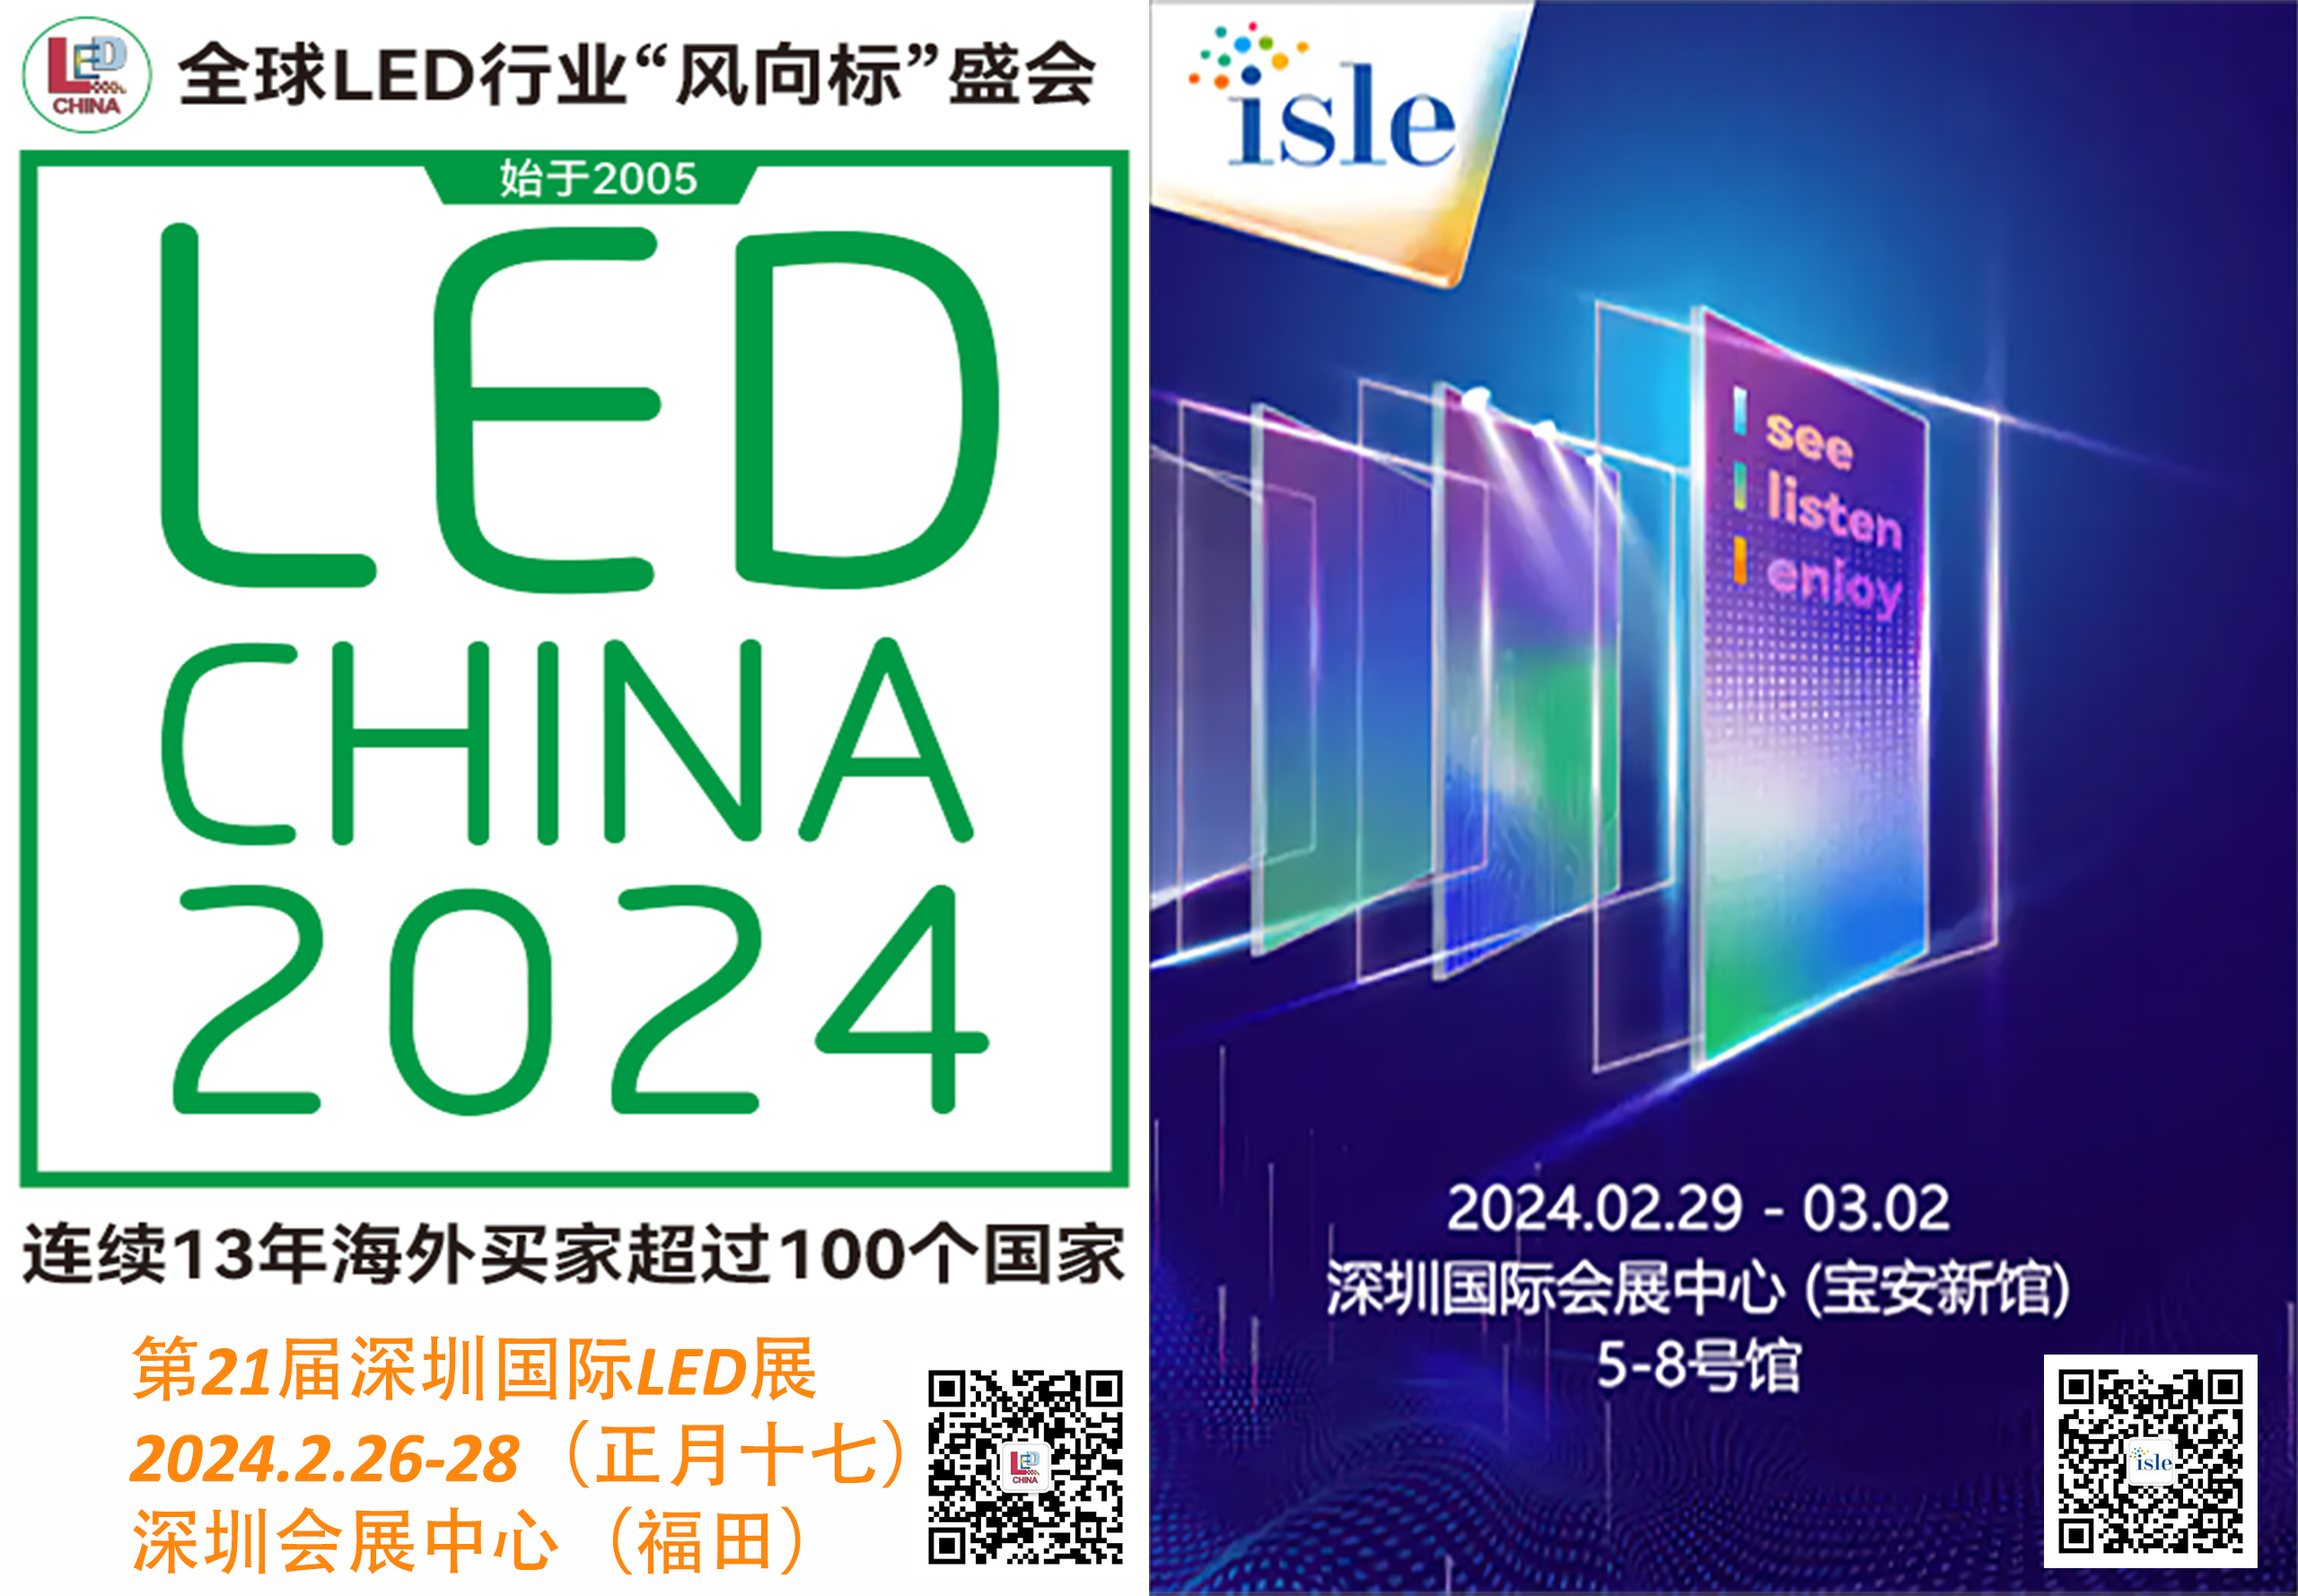 LED, ISLE Showcases Latest LED and Smart Display Technologies